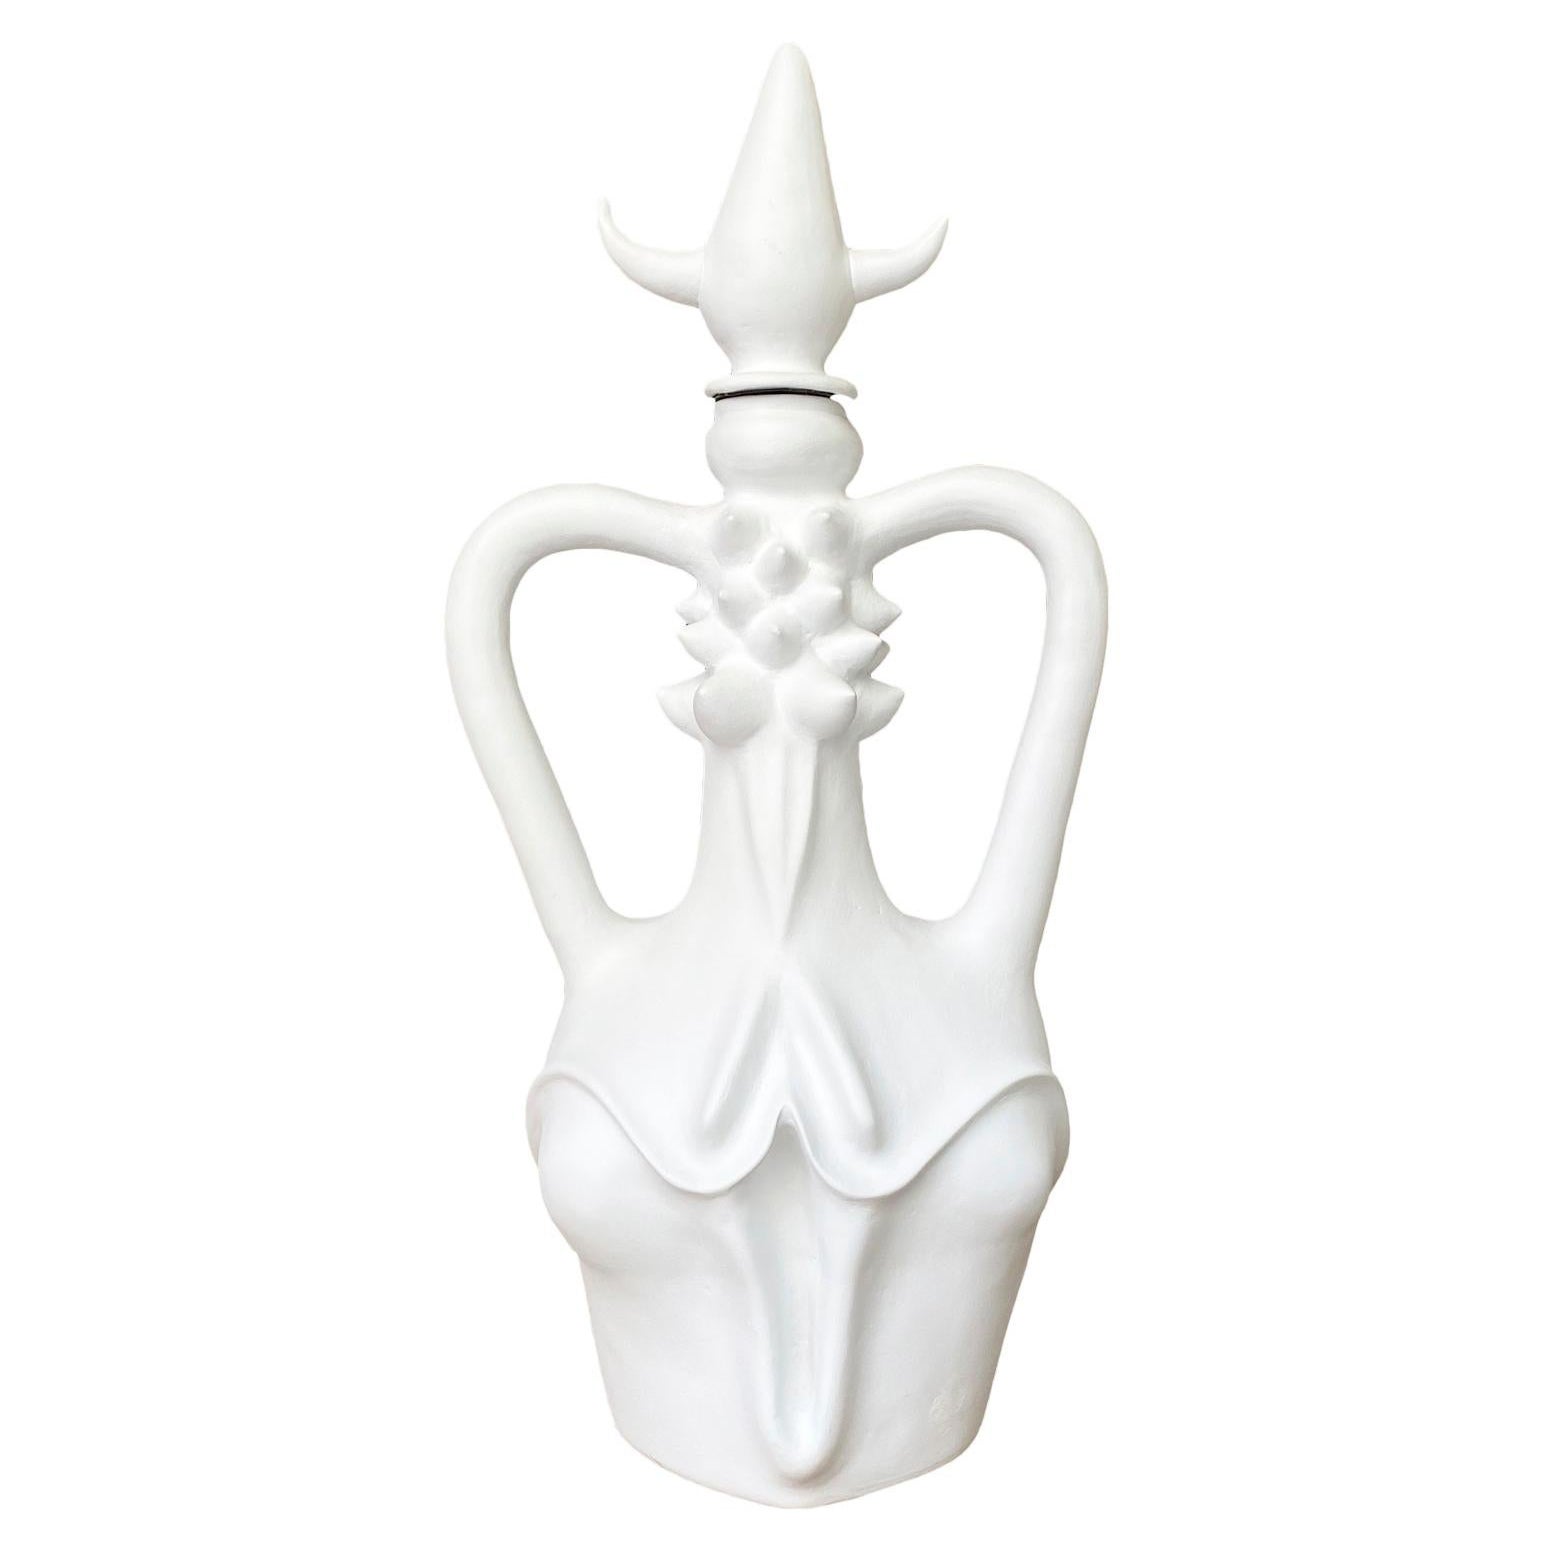 Amphora Sculpture with Vulva by Papin Lucadamo